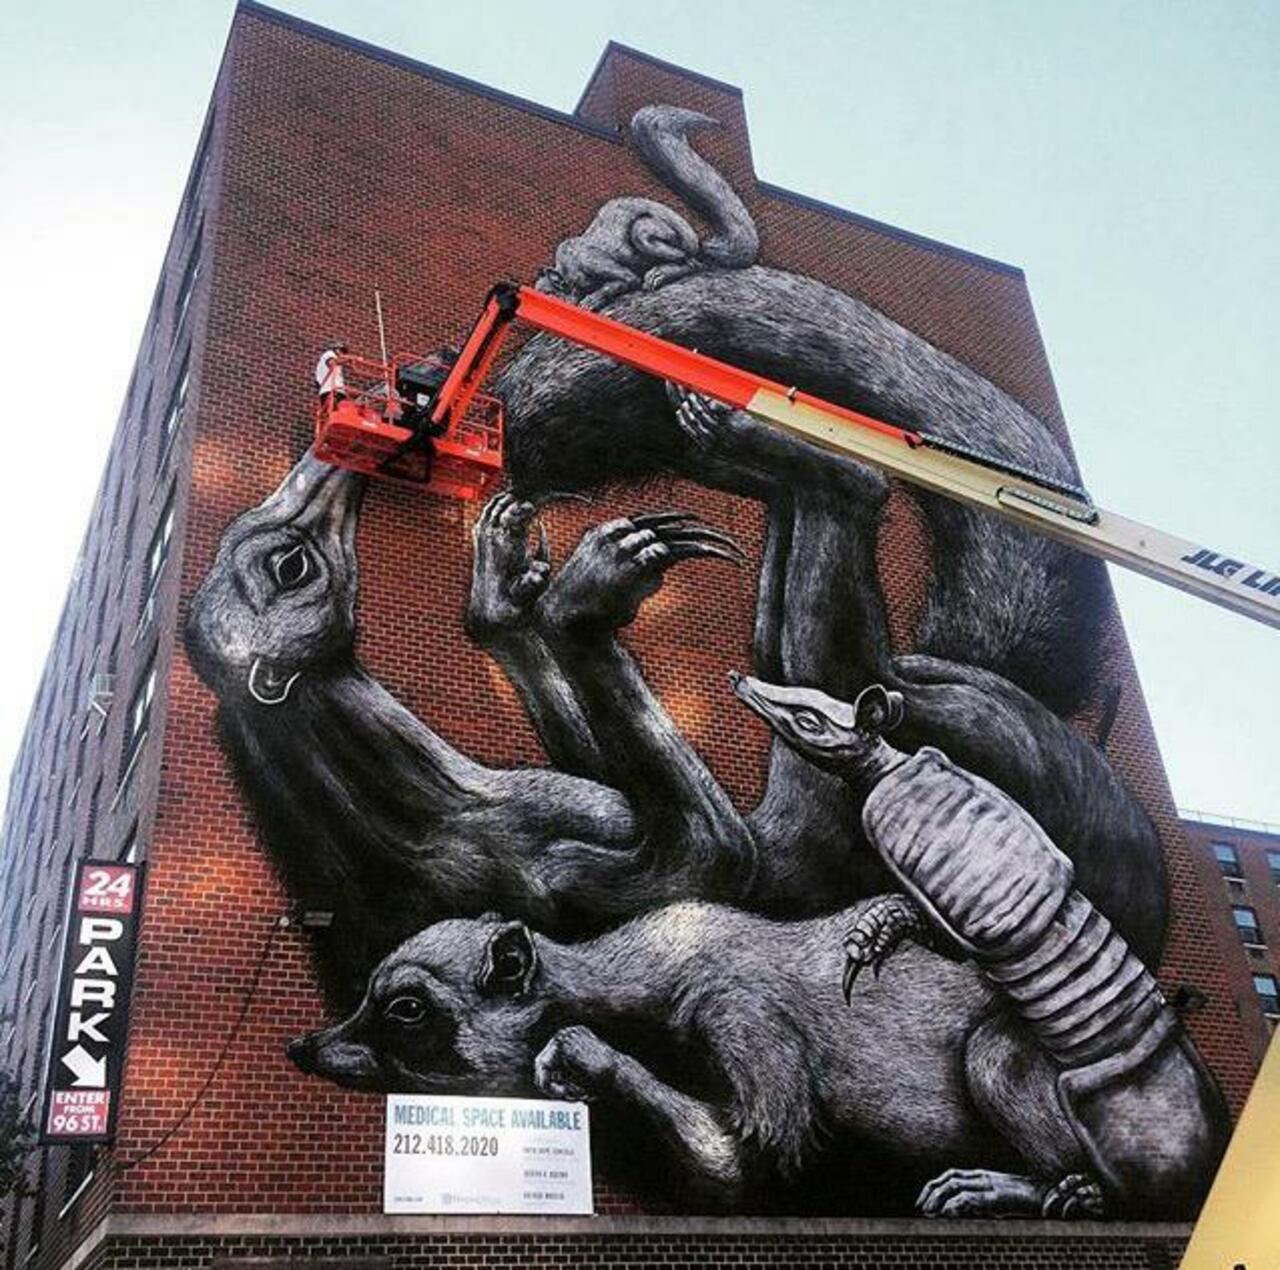 Street Art in progress by ROA in NYC

#art #graffiti #mural #streetart http://t.co/SyeYSvVQku